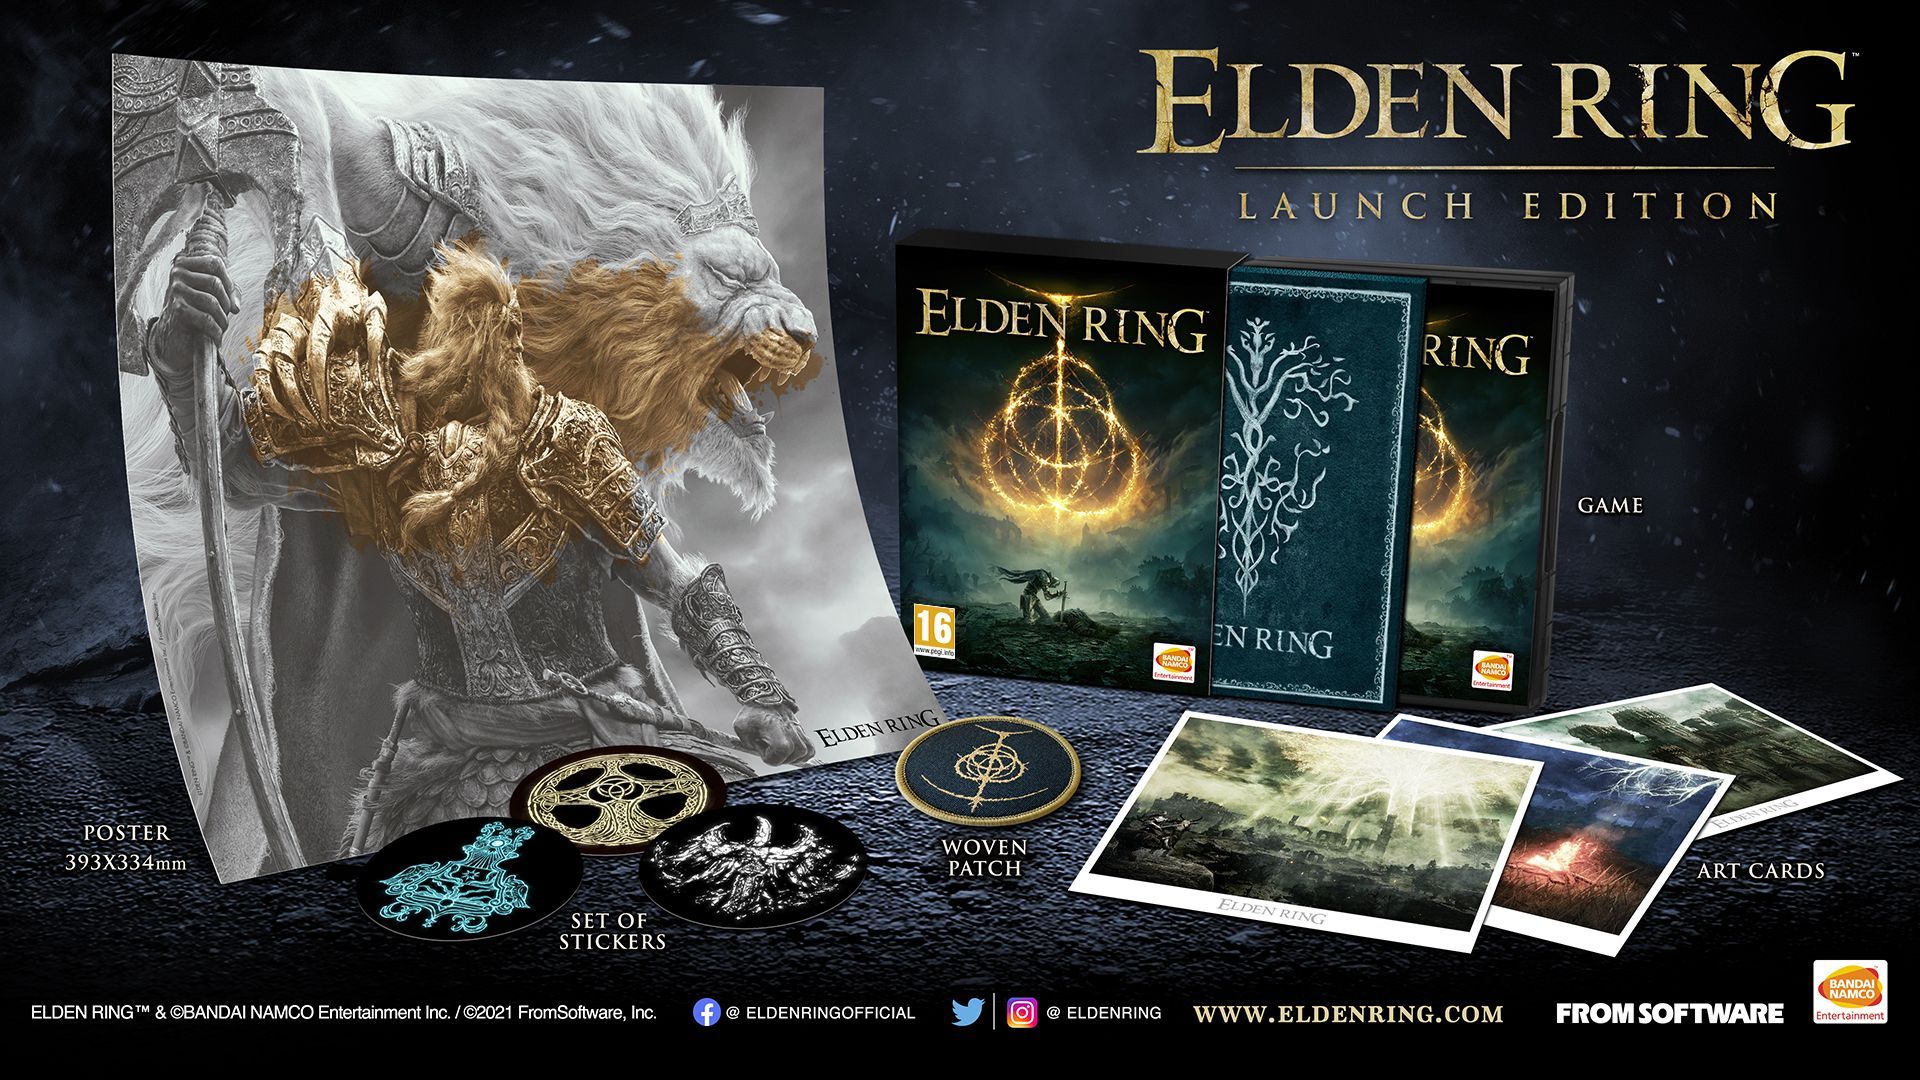 Elden Ring Launch Edition bonuses